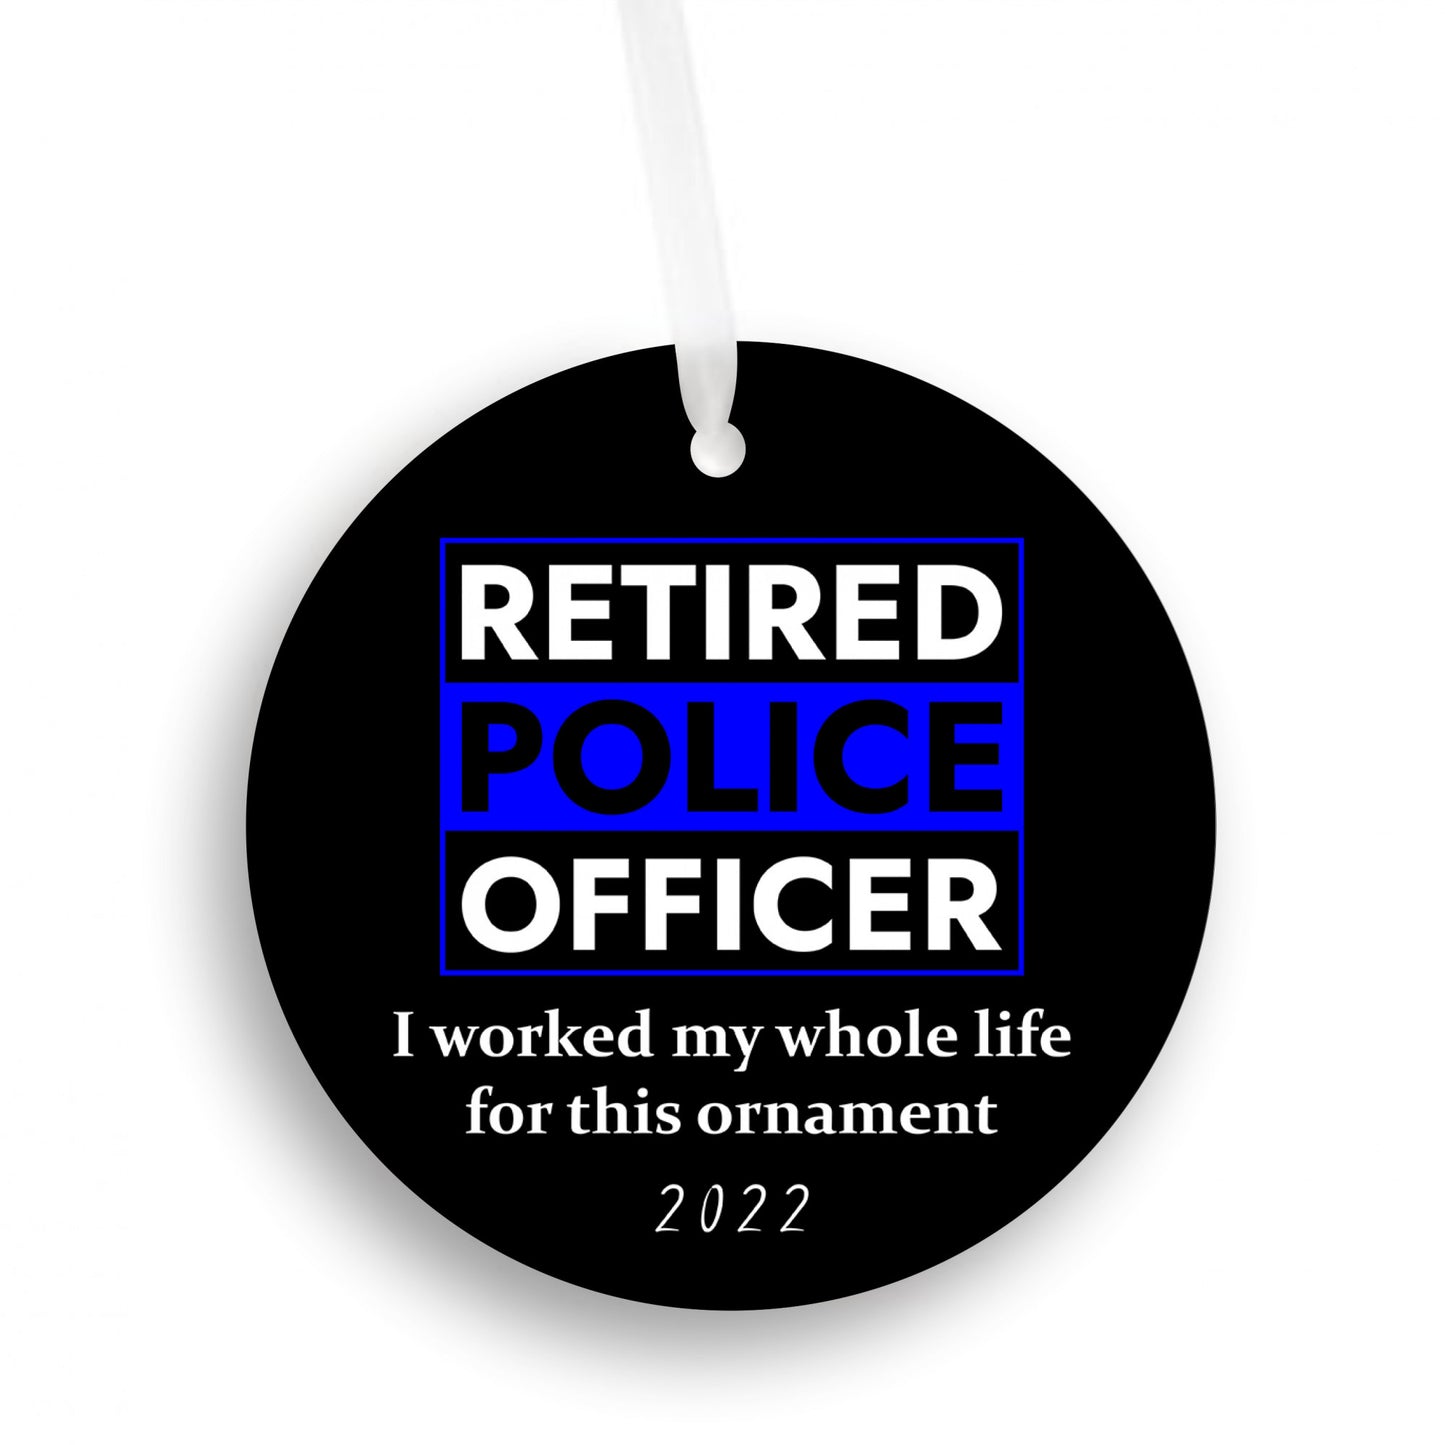 Retired Police Officer 2022 Ornament